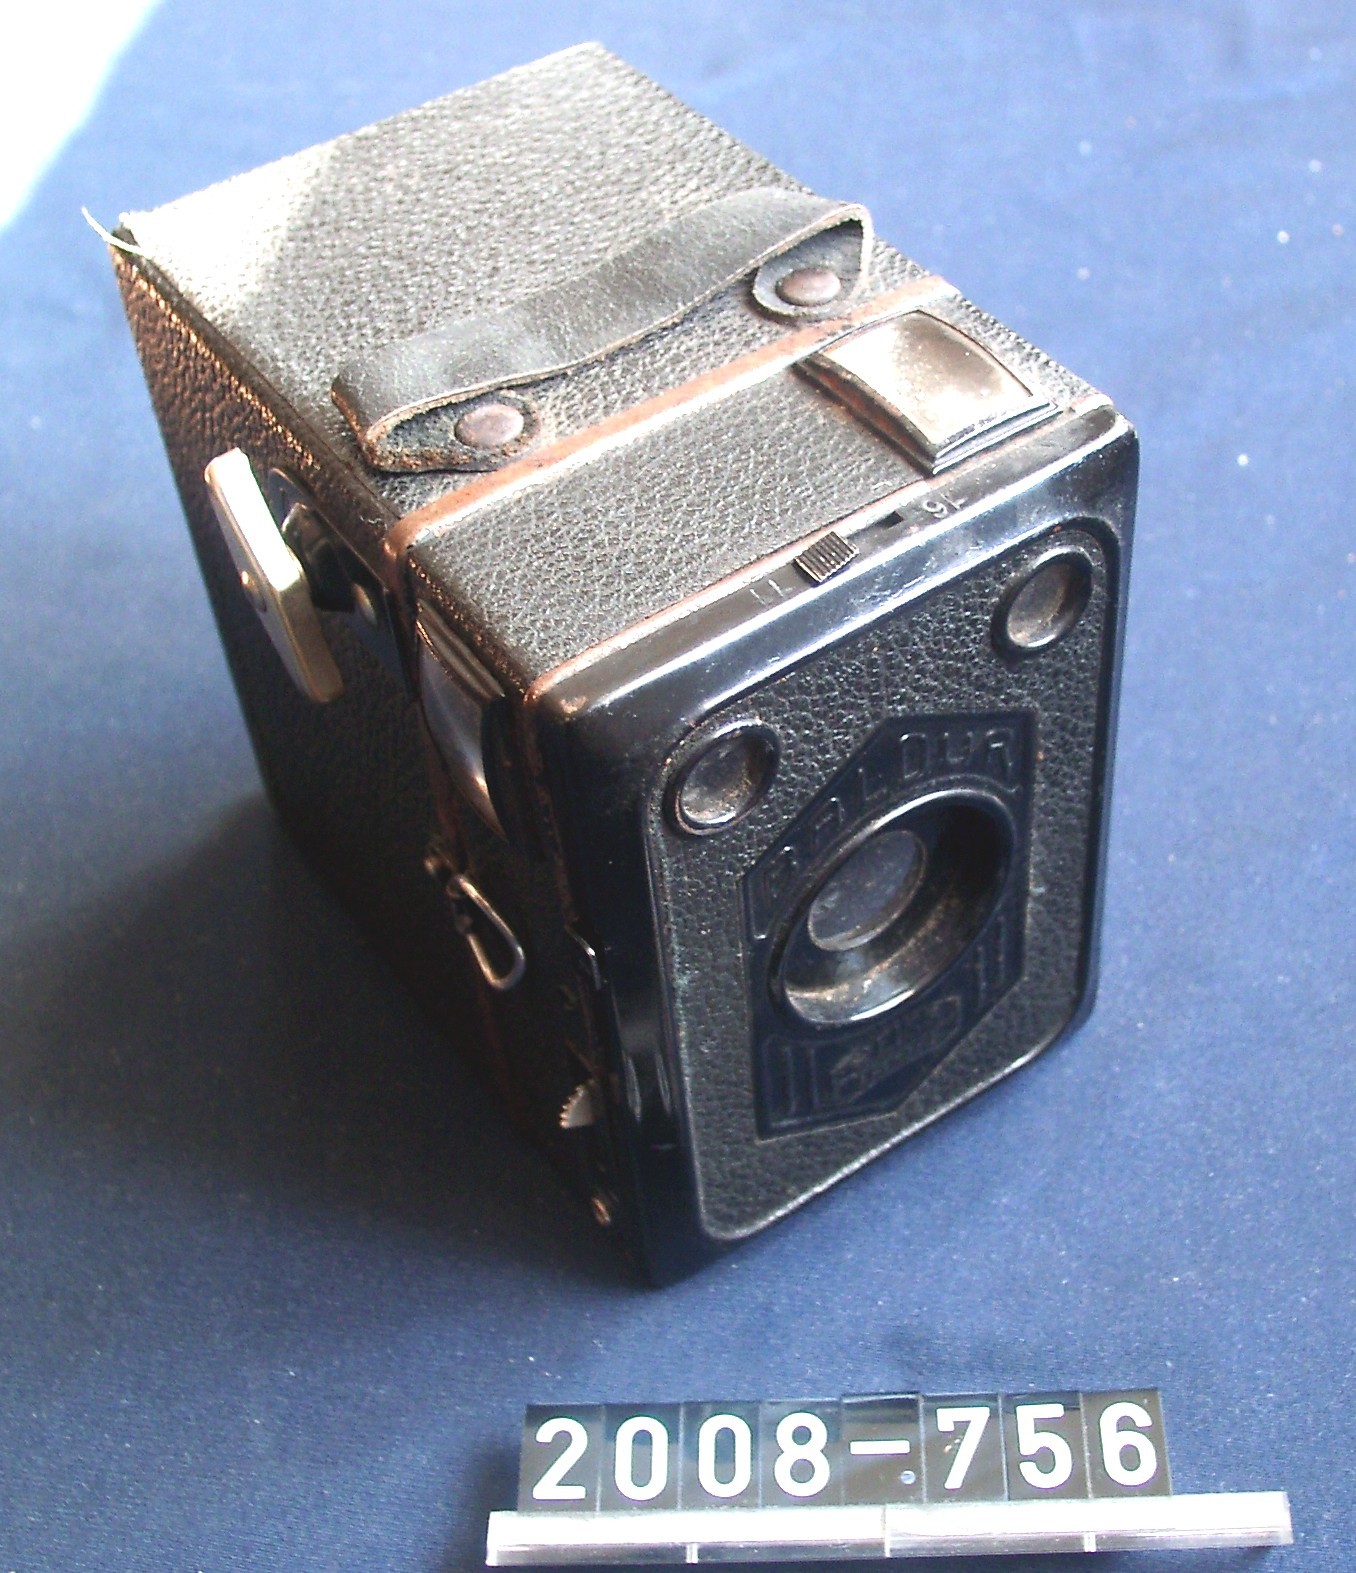 Kamera; Zeiss-Ikon Box-Kamera Baldur mit Ledertasche; um 1950 (Stadtmuseum Bad Dürkheim, Museumsgesellschaft Bad Dürkheim e.V. CC BY-NC-SA)